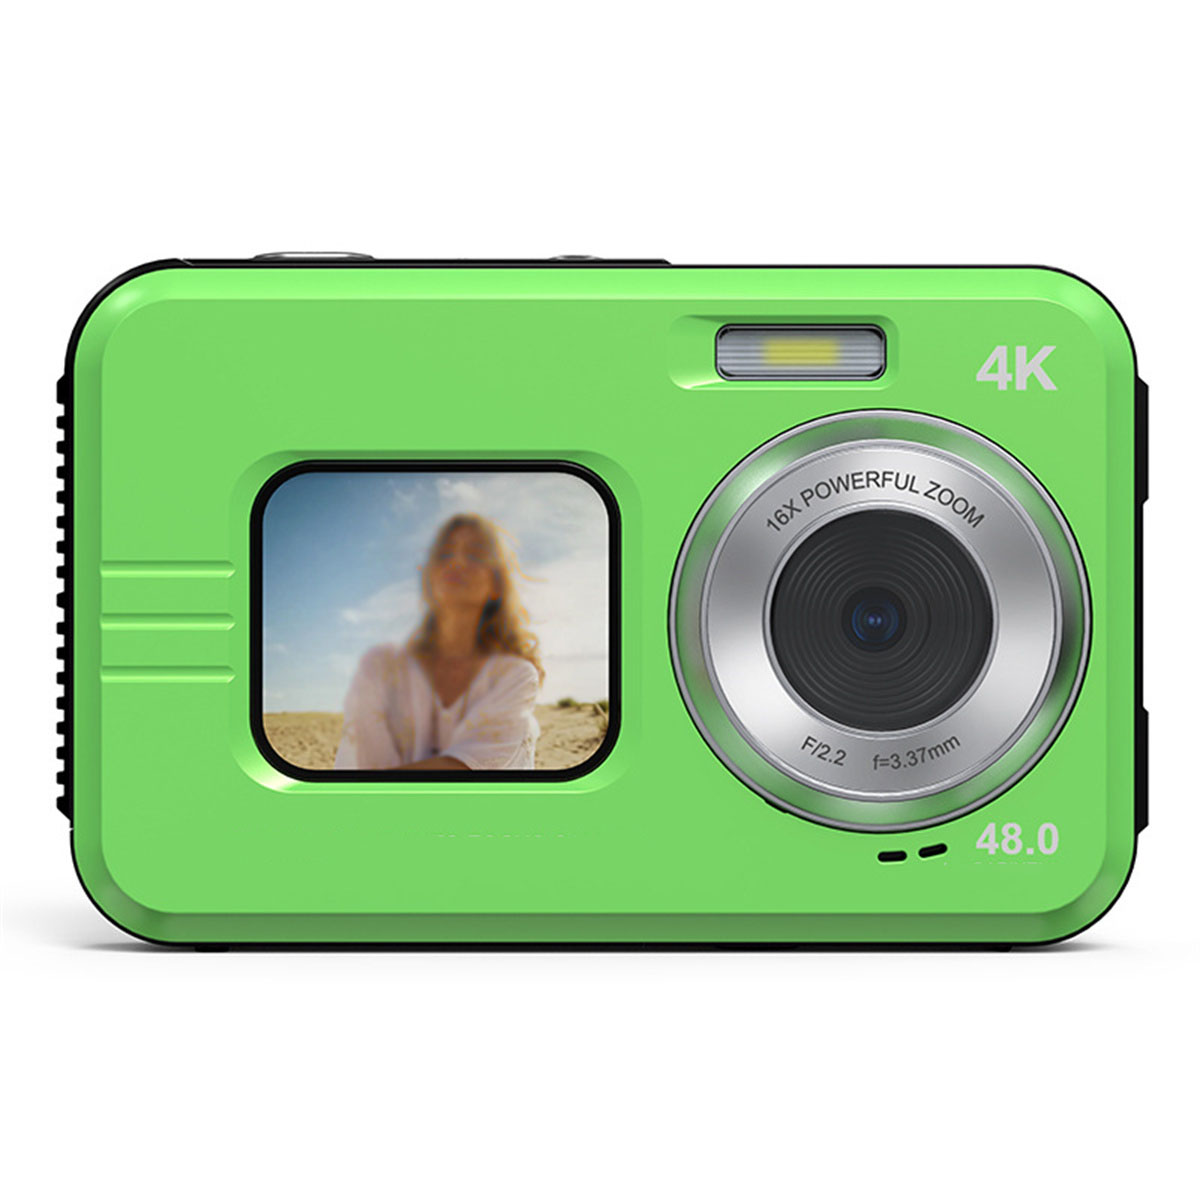 SYNTEK HD Dual Autofokus, Fotografie Wasserdichte intelligenter Verwacklungsschutz Digitalkamera grün, - Kamera Screen LCD-Bildschirm